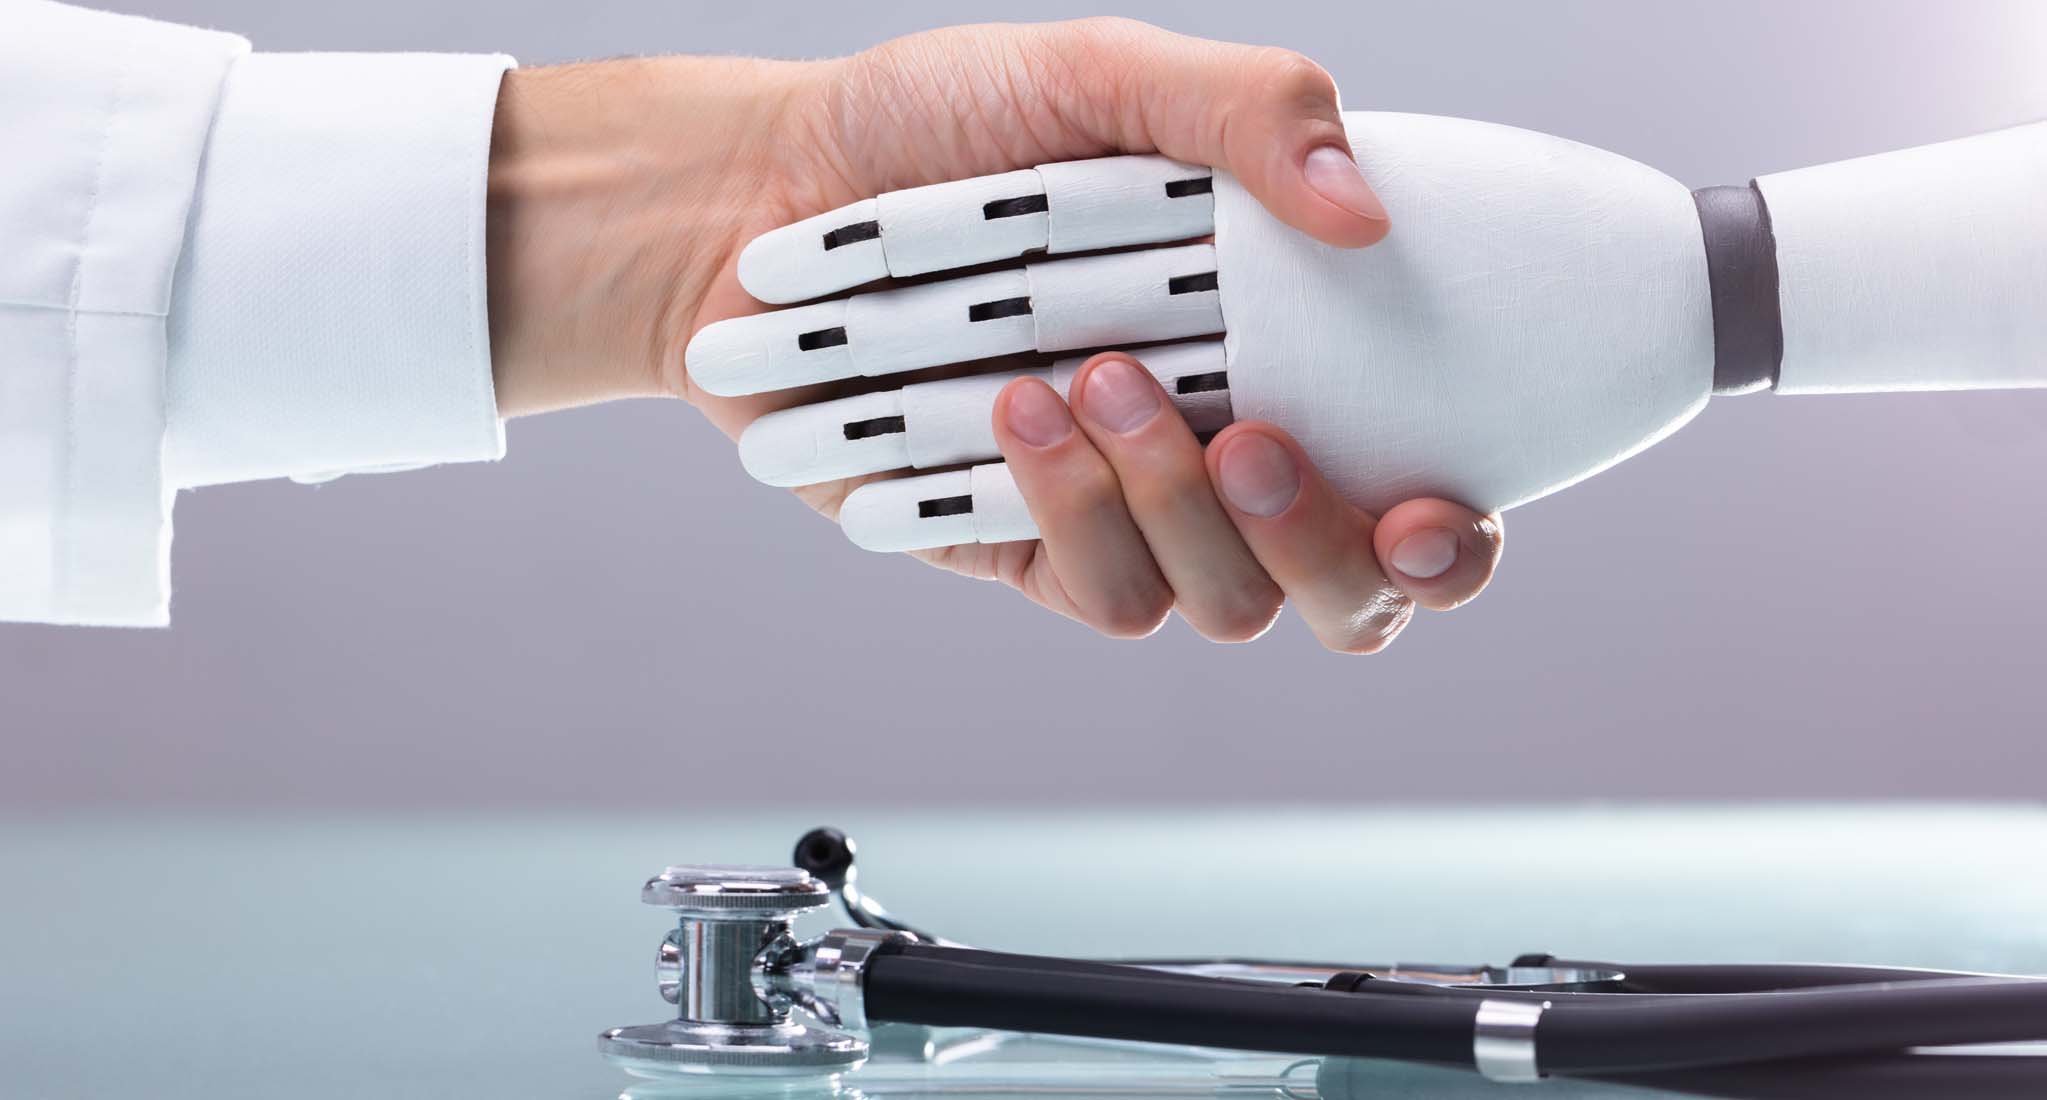 A human hand shaking a robotic hand.